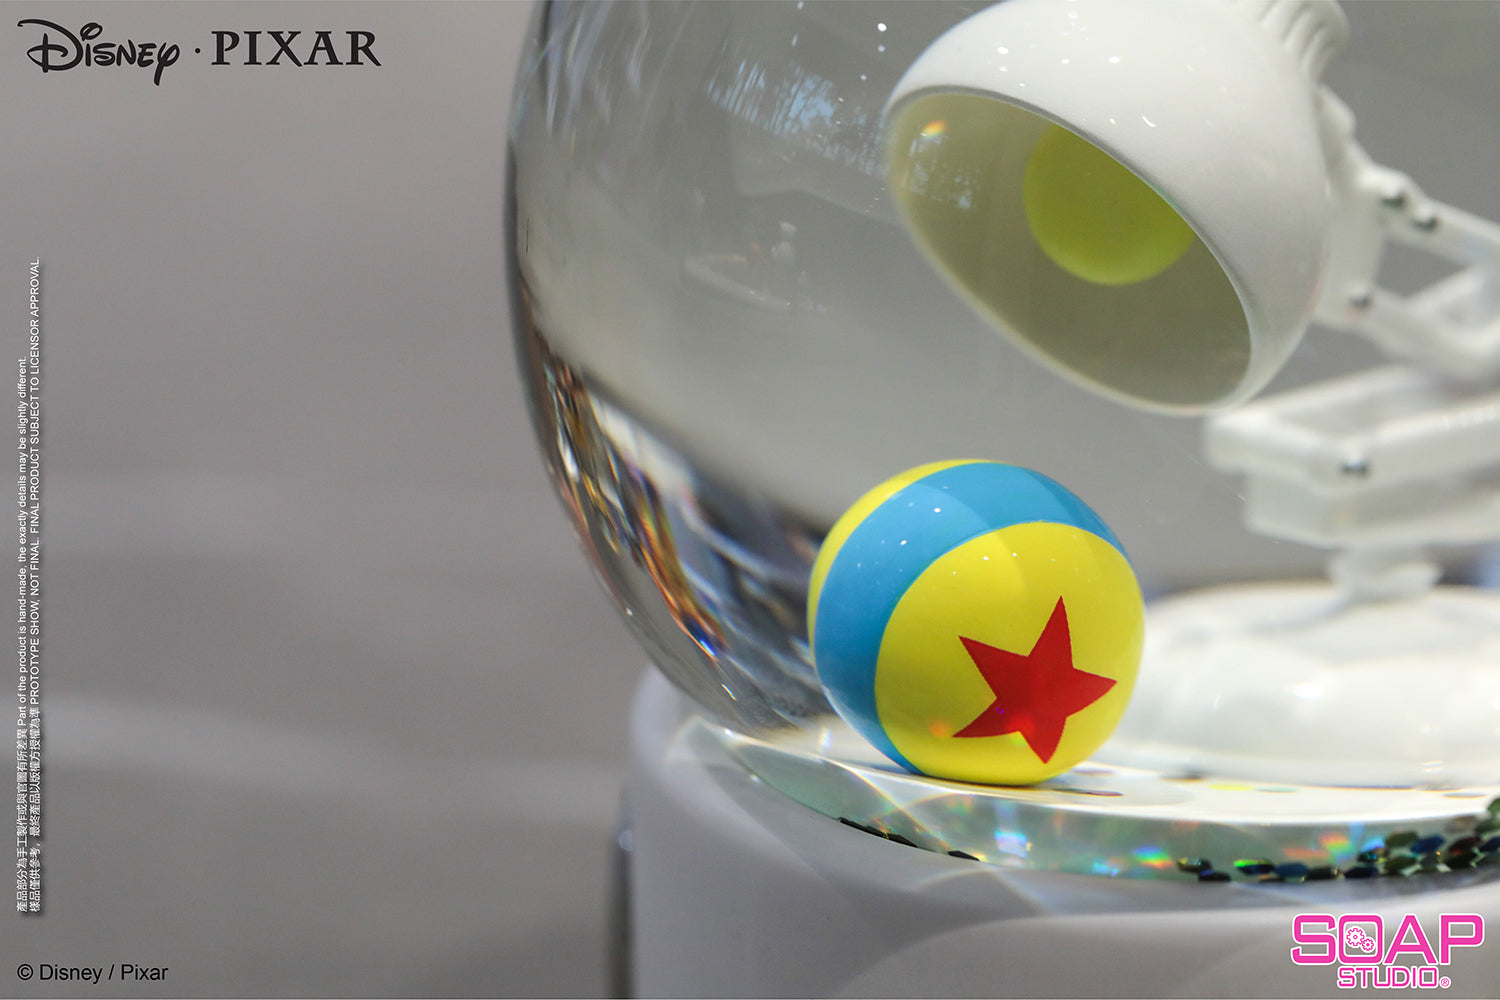 Soap Studio PX301 Pixar - Luxo Ball Snow Globes